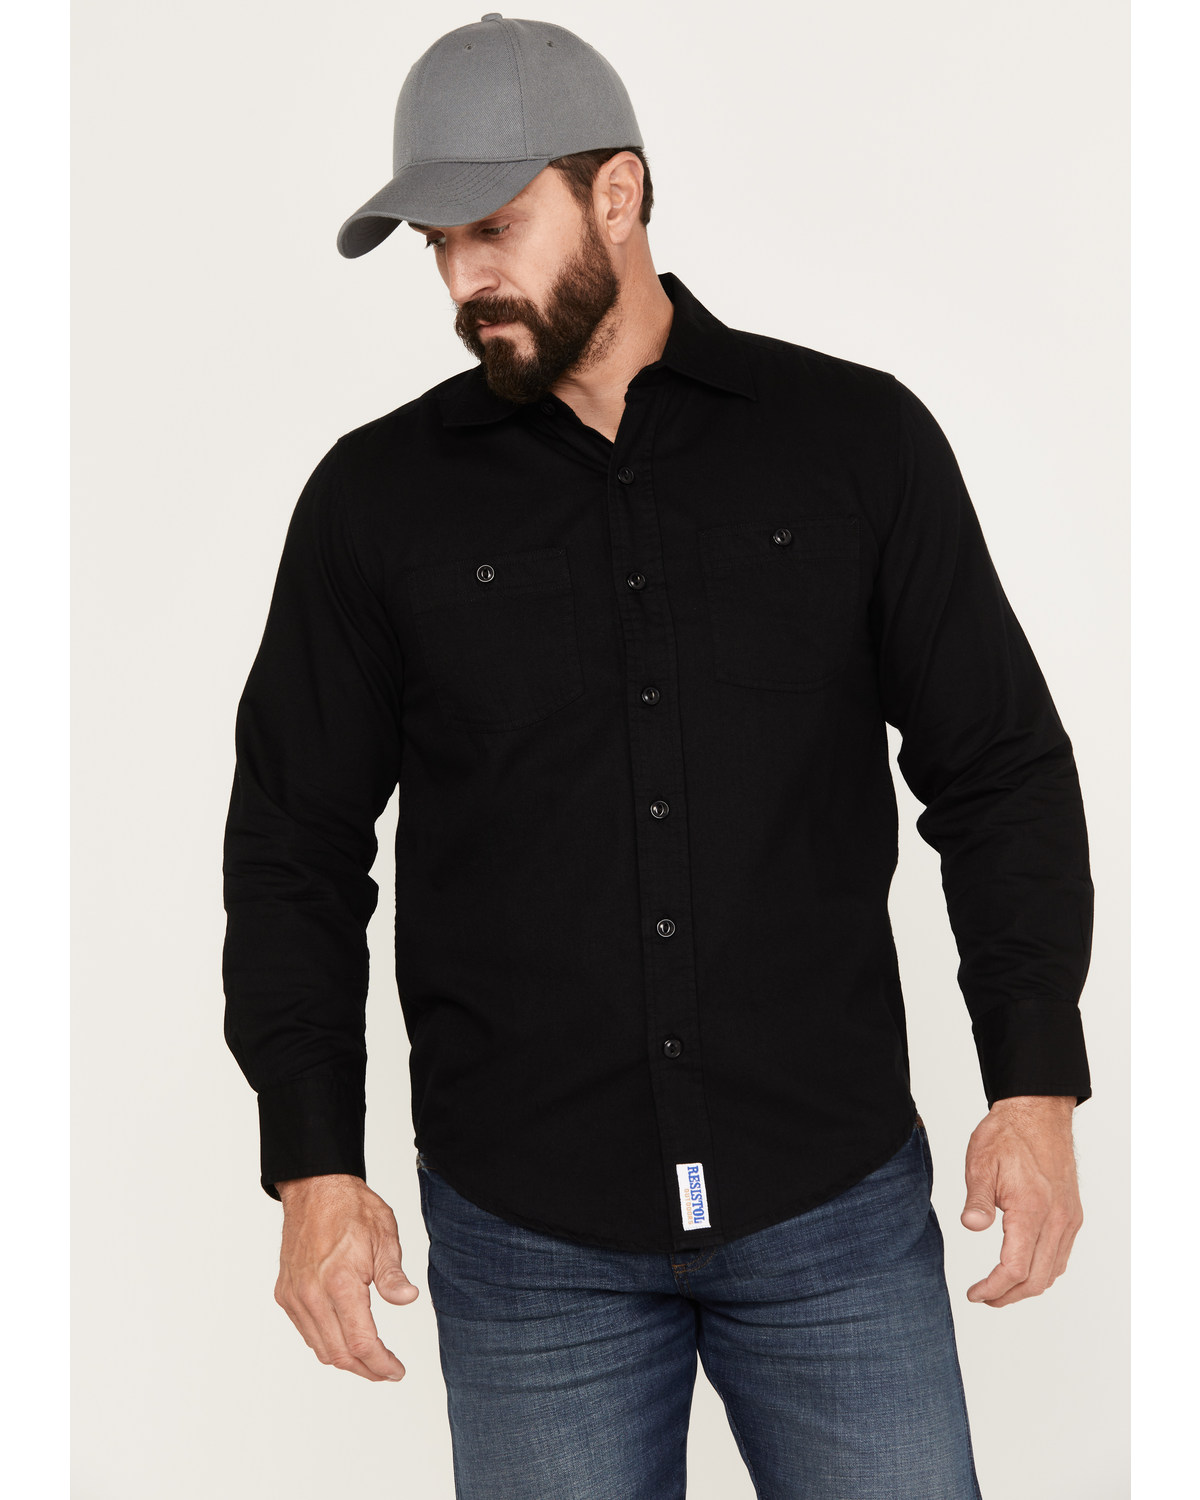 Resistol Men's Aspen Plaid Solid Long Sleeve Button Down Western Shirt